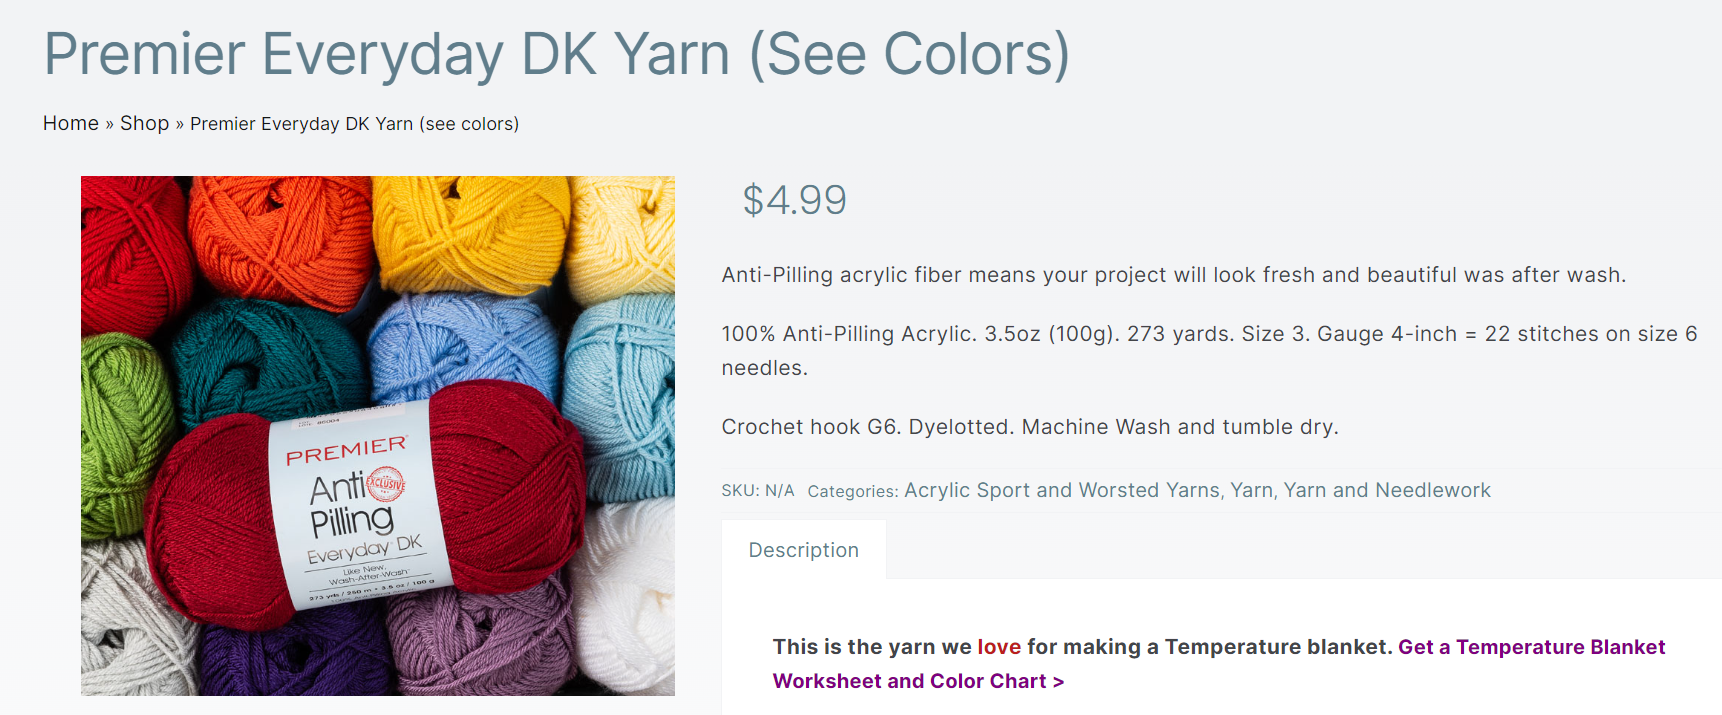 Buy Yarn to make a Temp Blanket